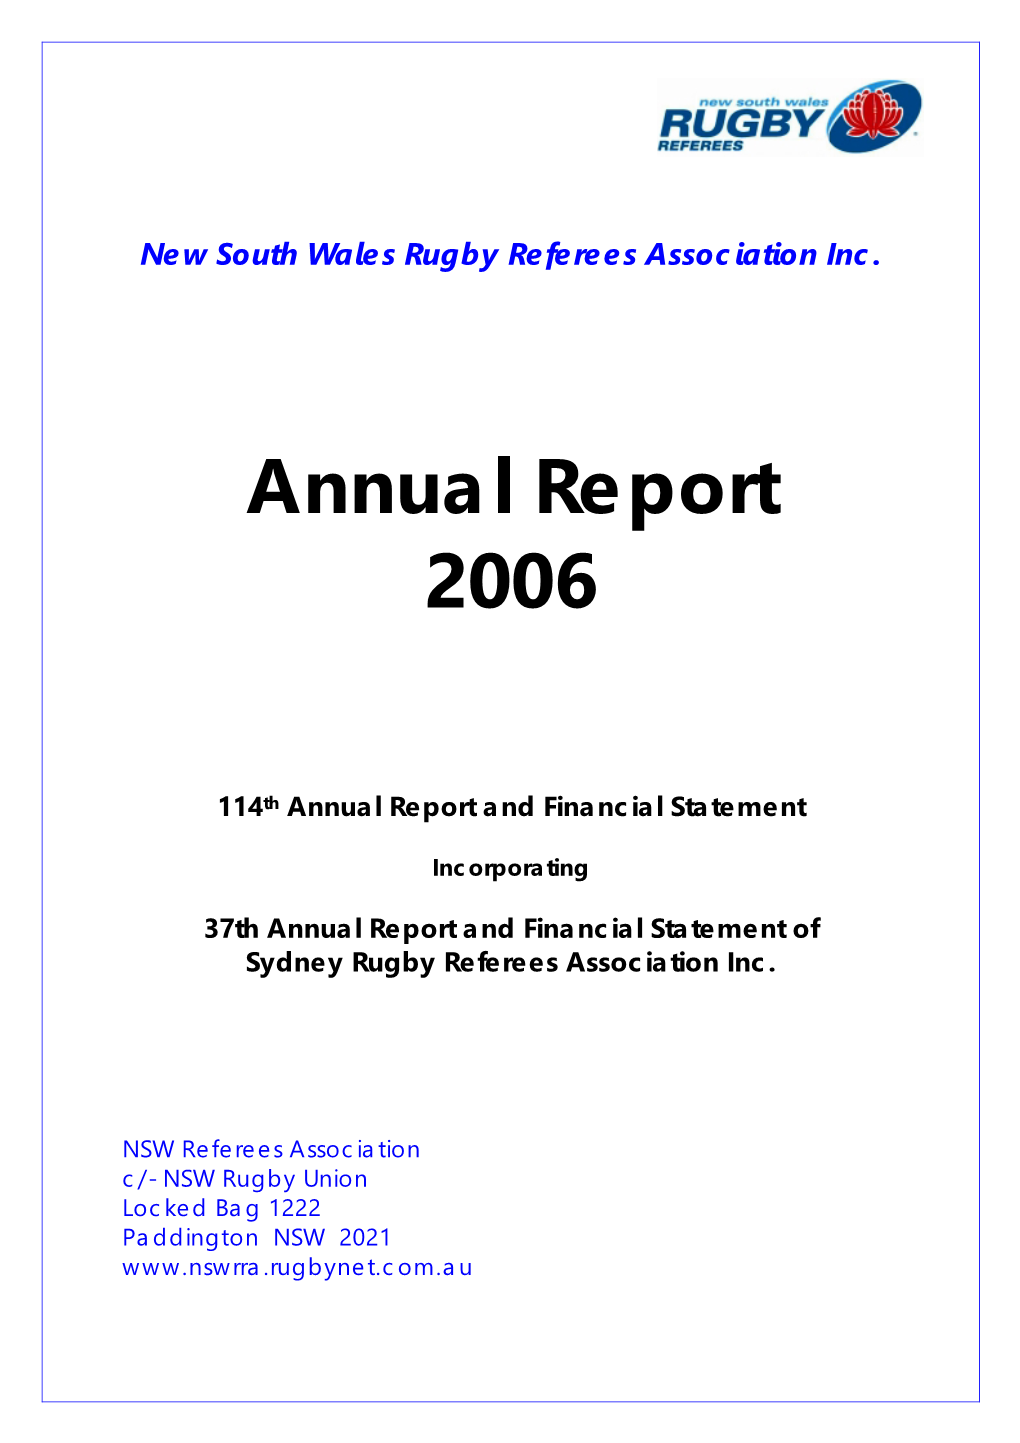 NSWRRA Annual Report 2006 I